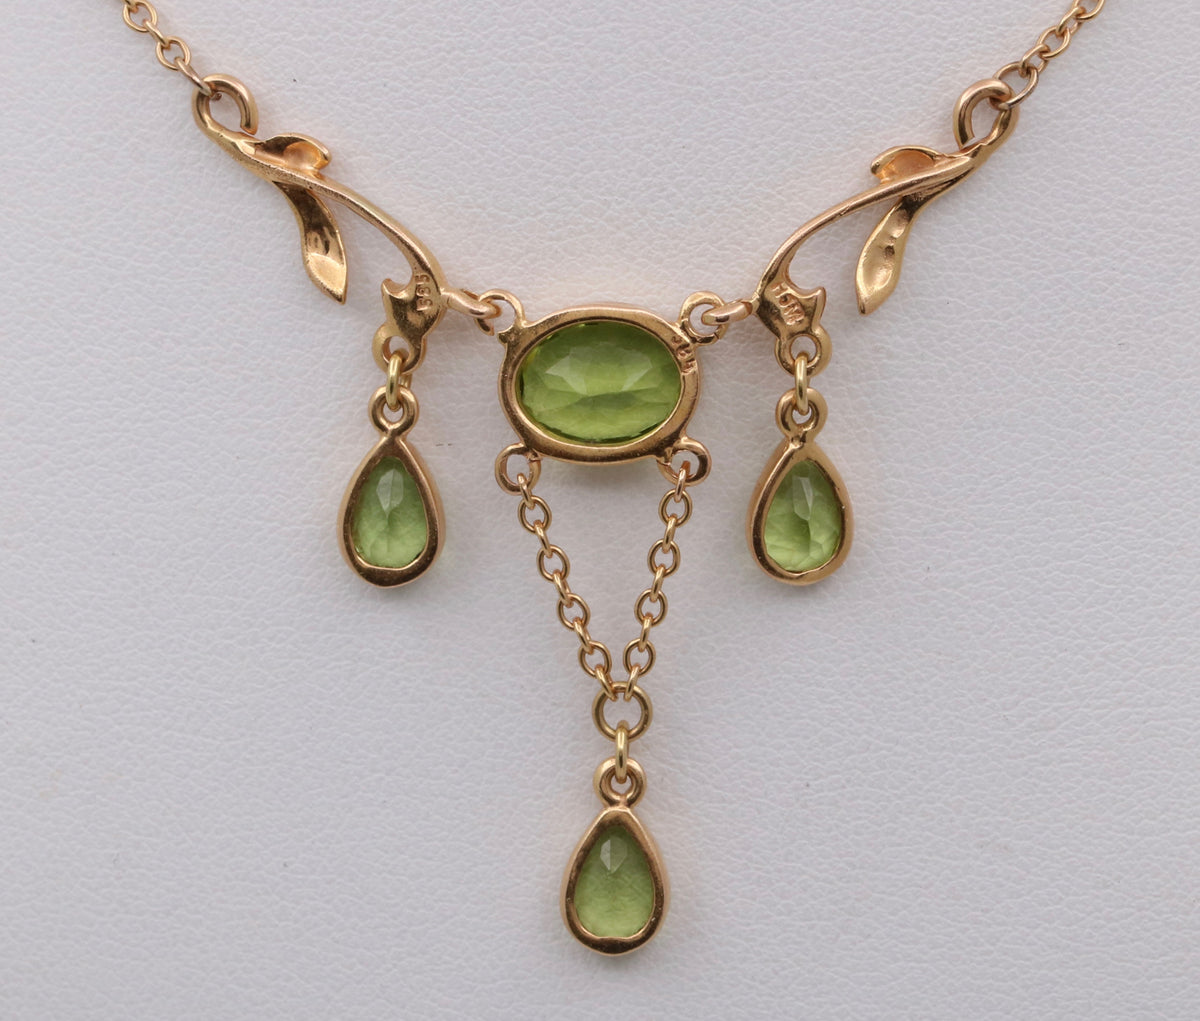 Peridot and 14K Gold Art Nouveau Style Lavalier Necklace